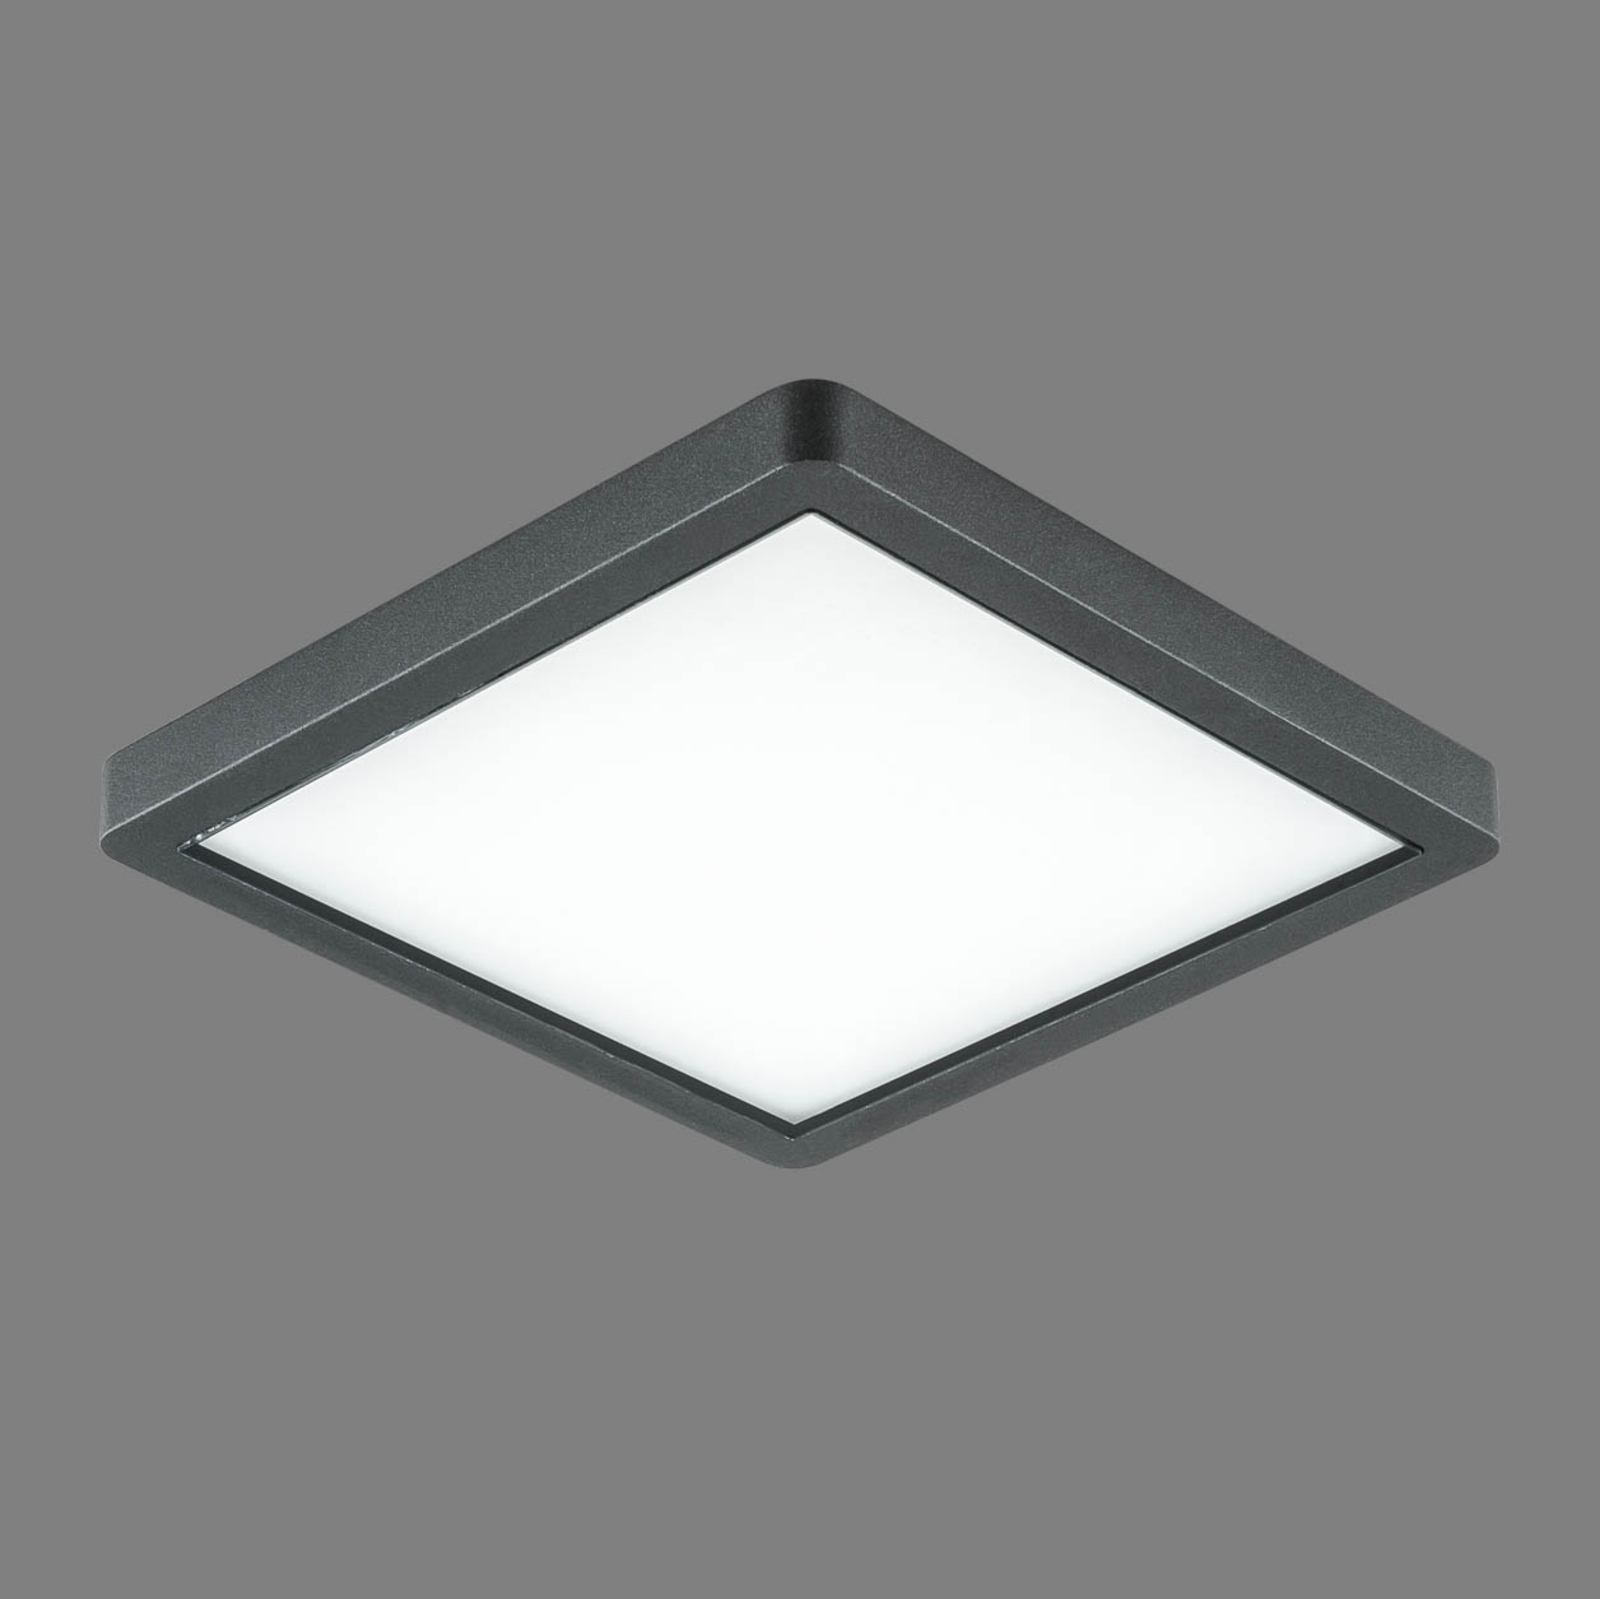 EVN Tectum LED-utomhustaklampa, kantig med glas